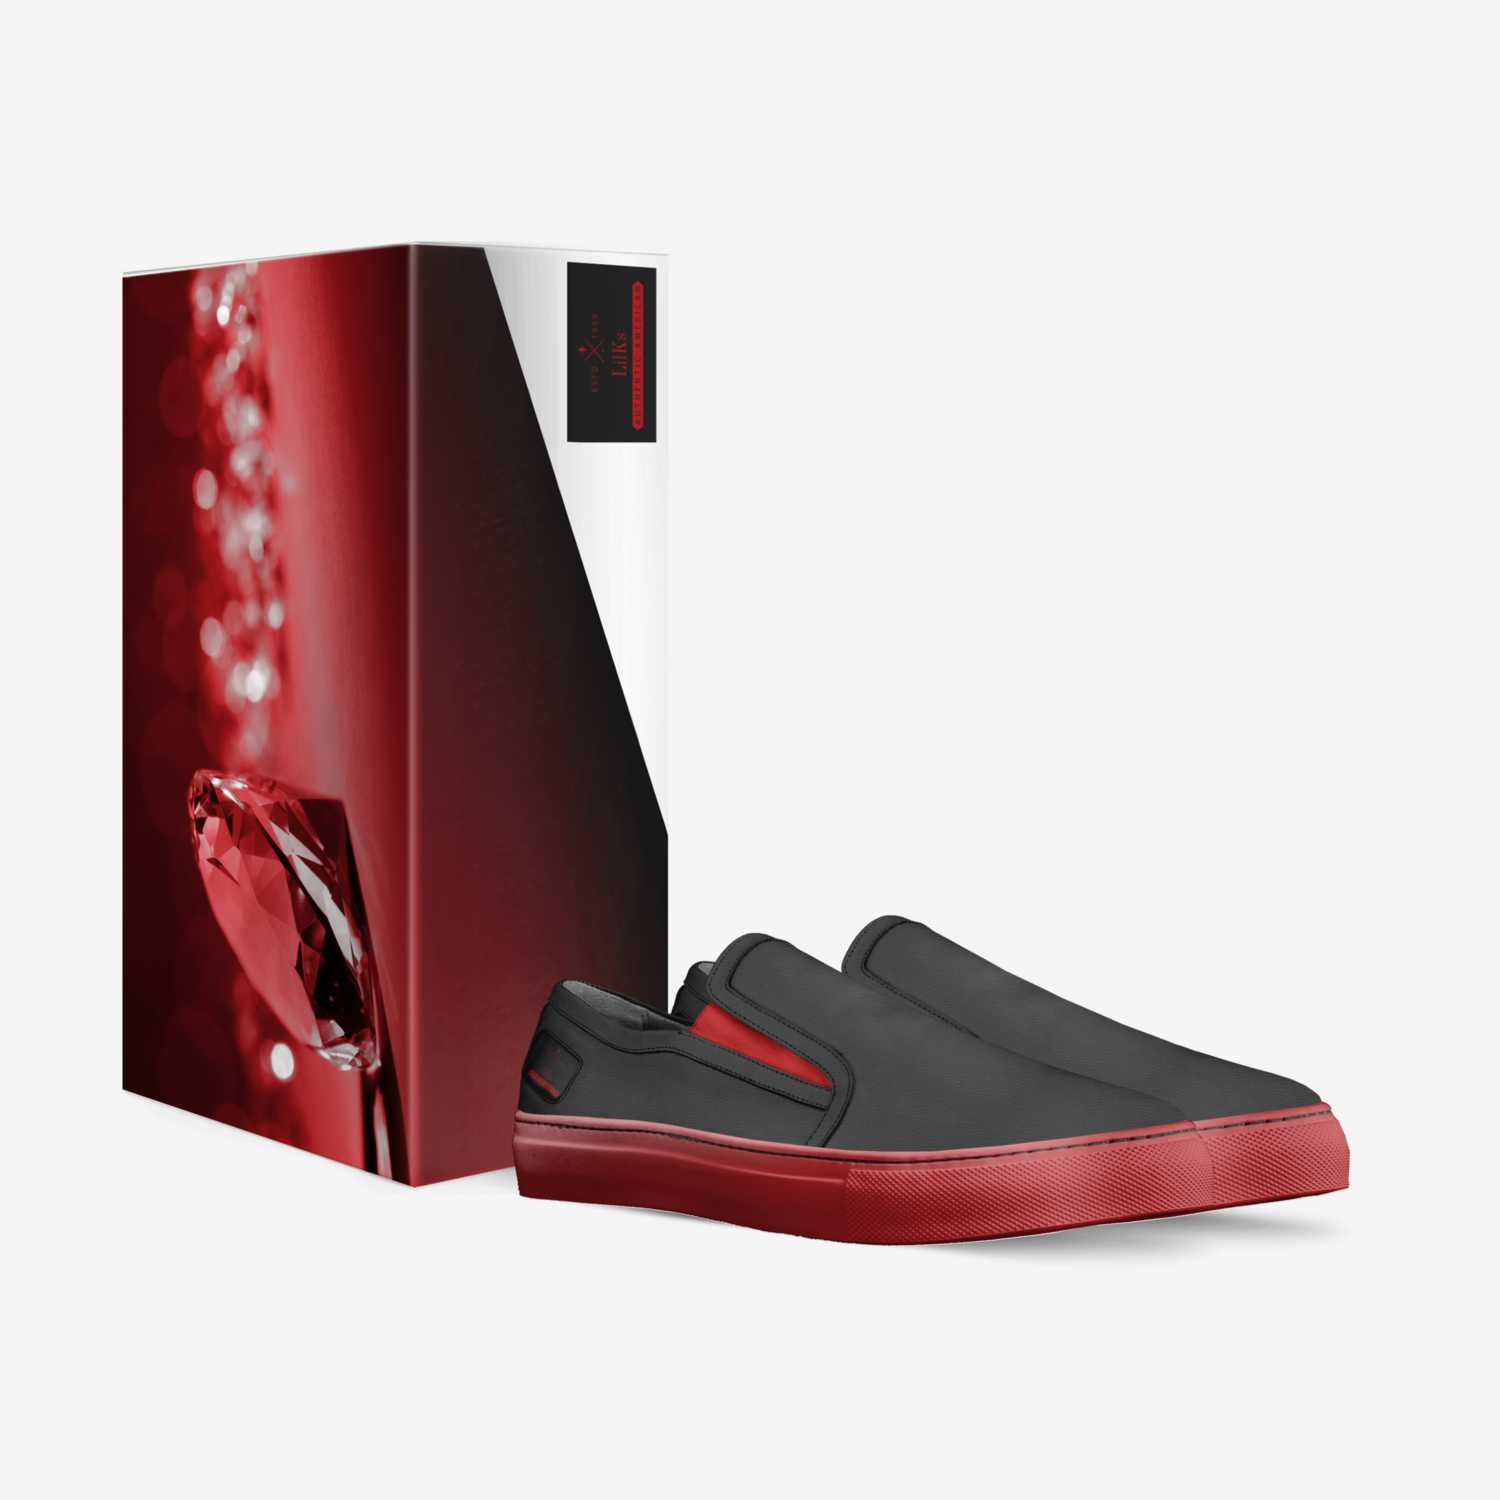 LilKs custom made in Italy shoes by Dalynn Baldwin | Box view